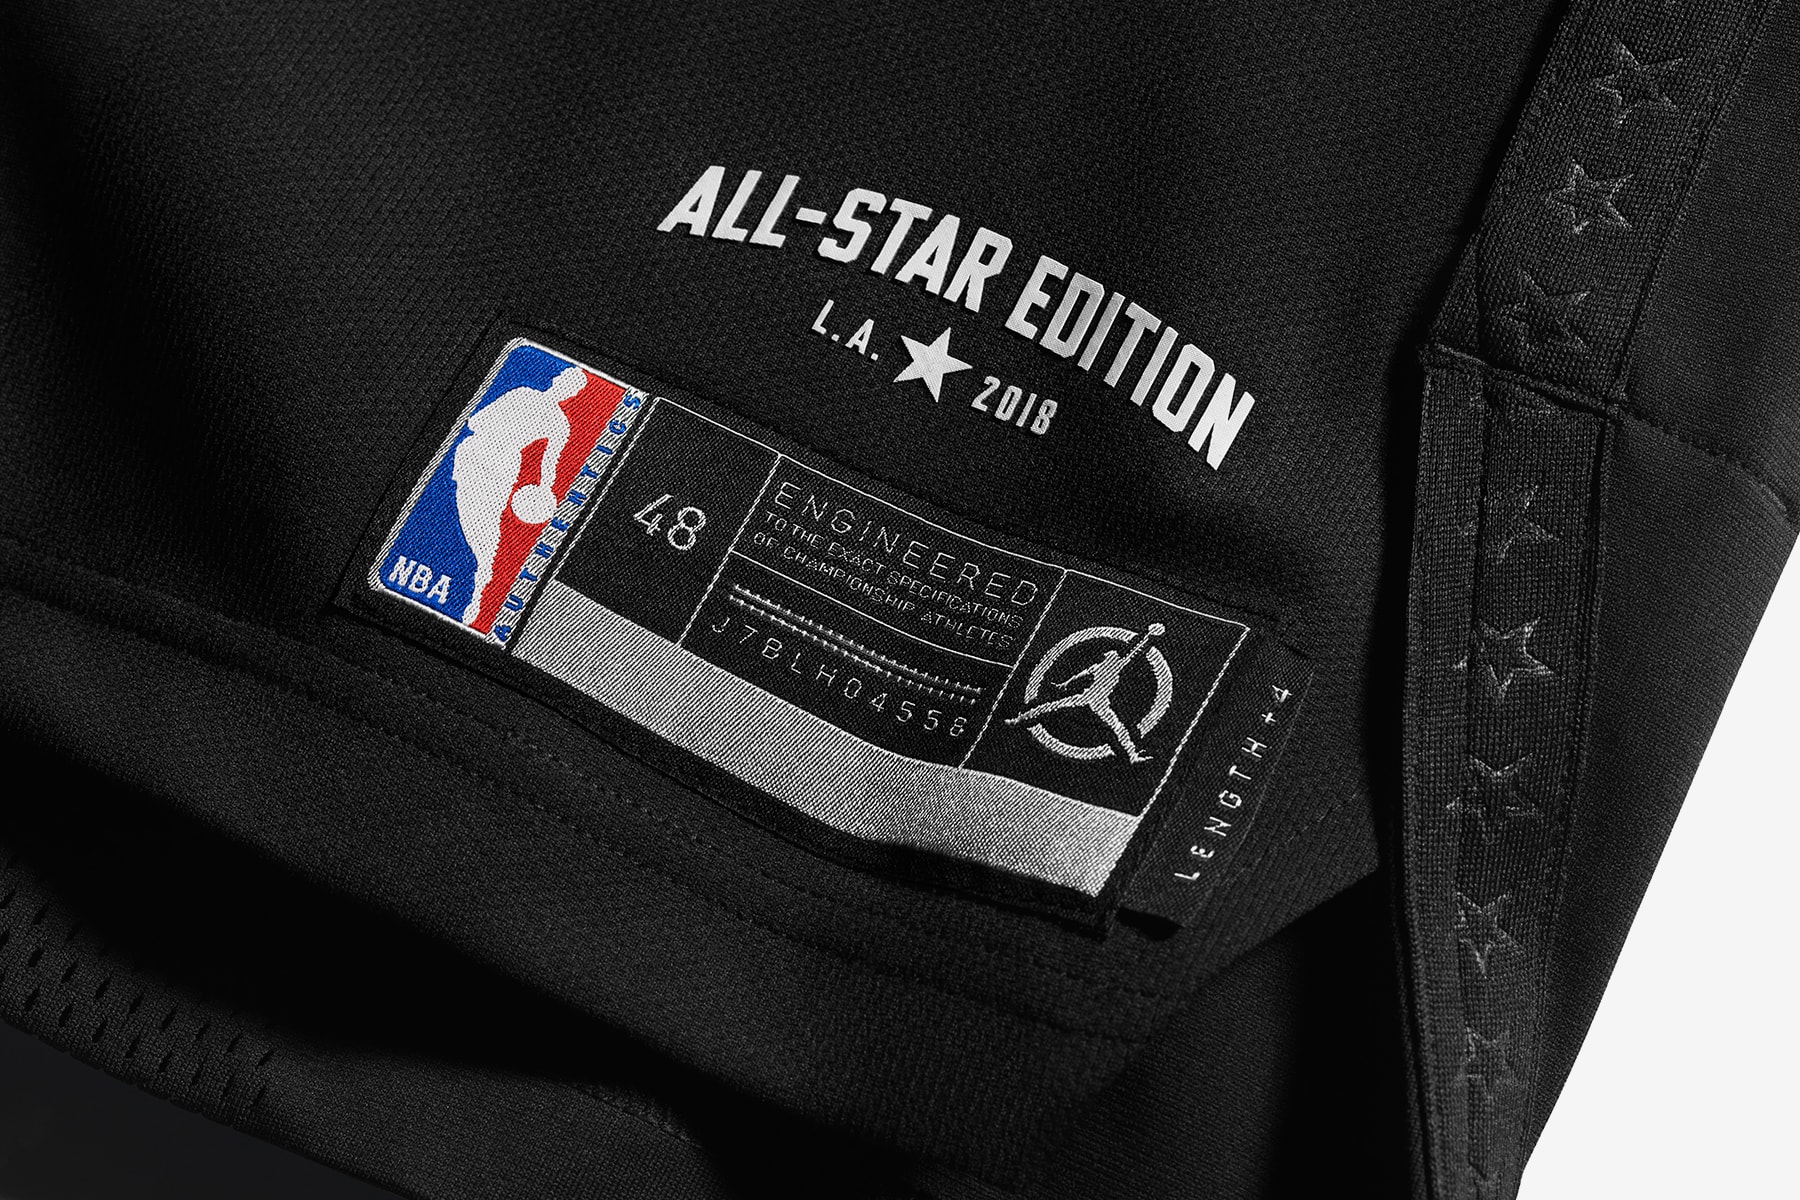 Jordan Brand 2018 NBA All-Star Game Uniforms Russell Westbrook OKC Oklahoma City Thunder